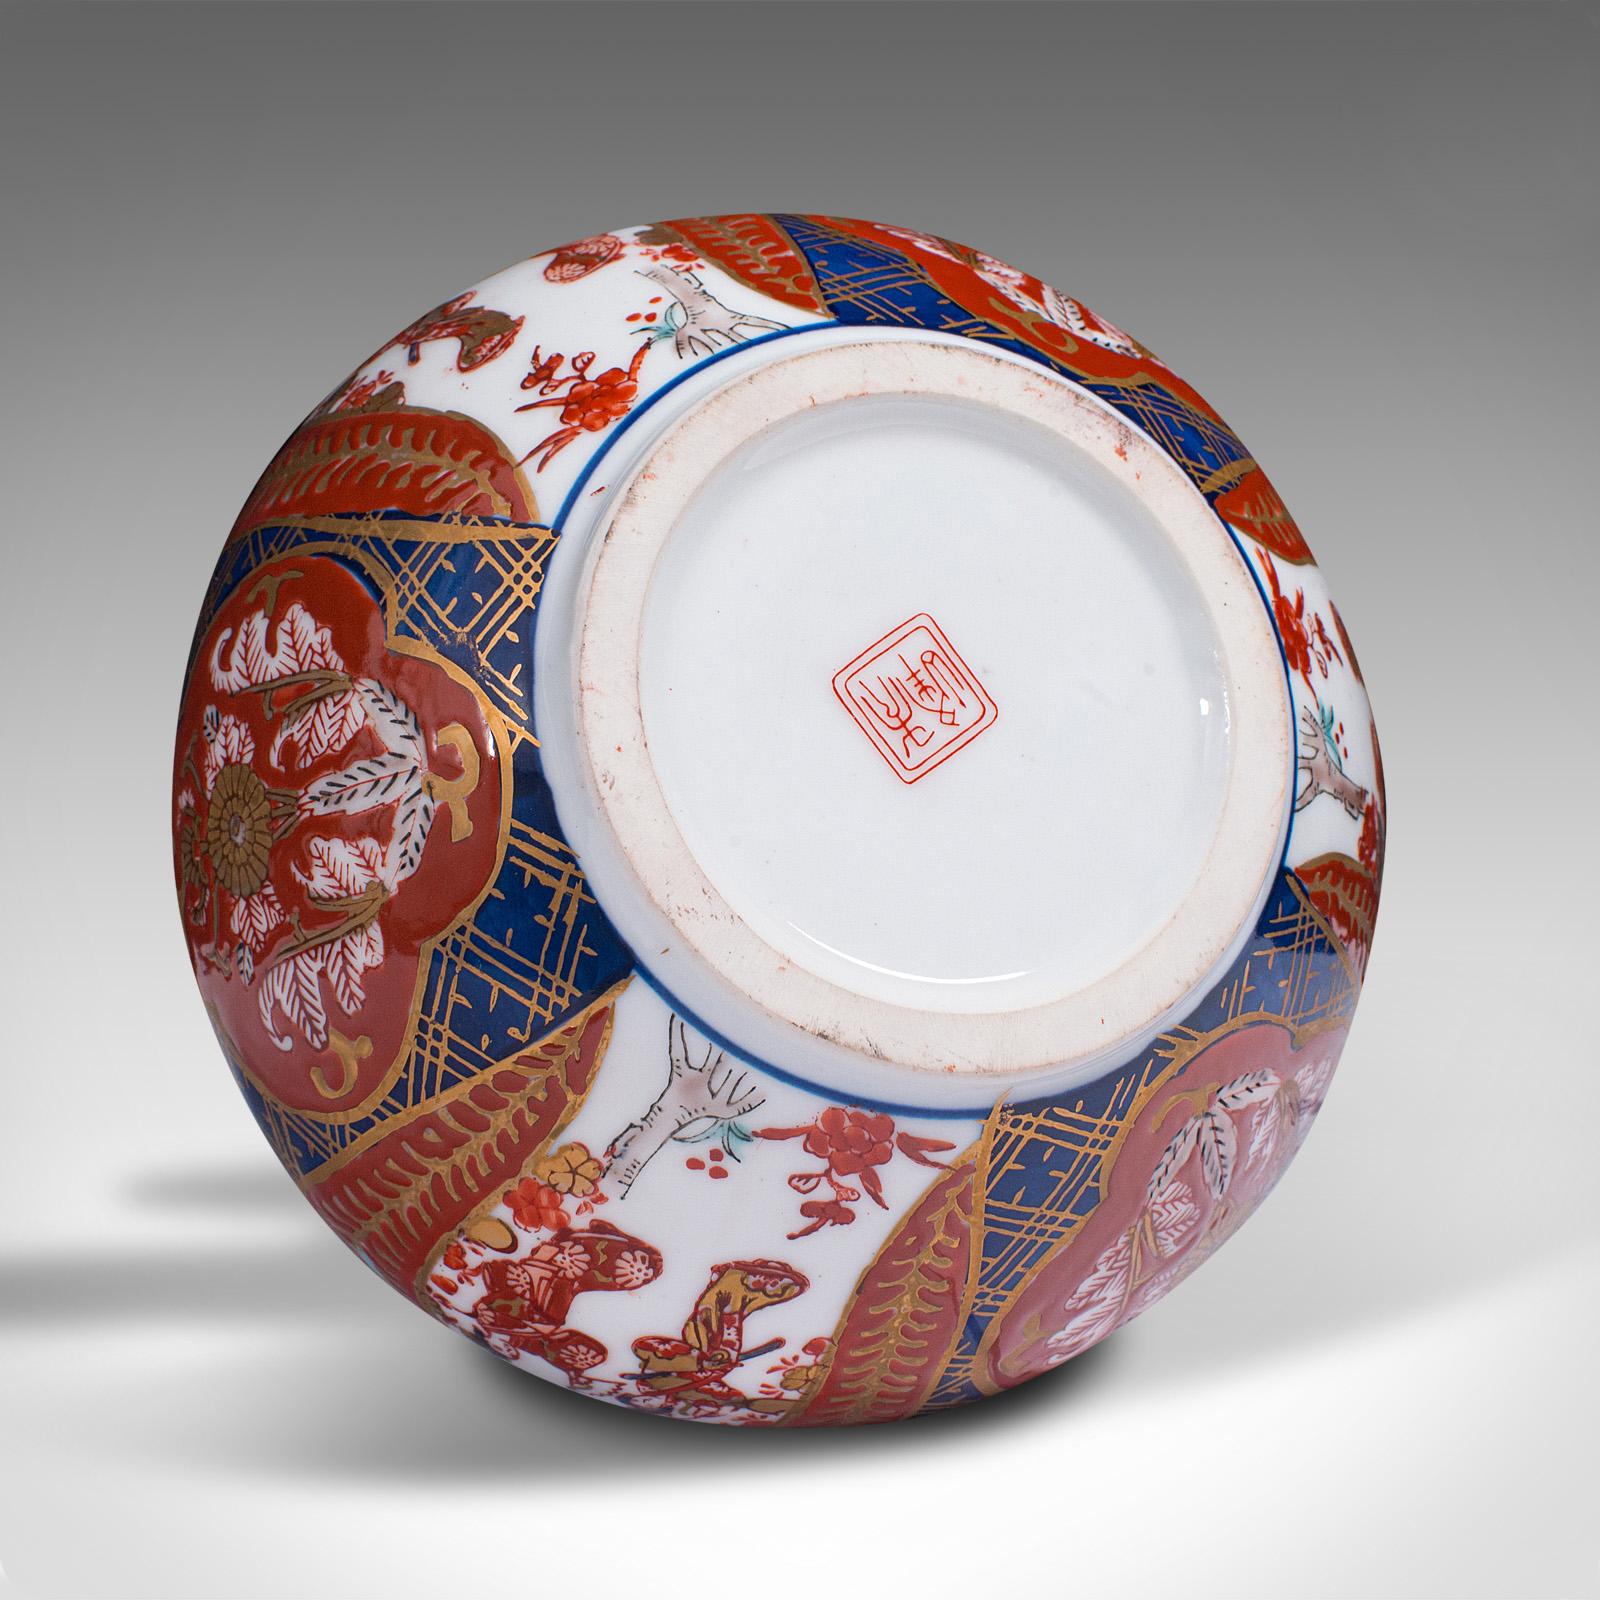 Vintage Imari Revival Flower Vase, Chinese, Ceramic, Decorative, Display Urn For Sale 7